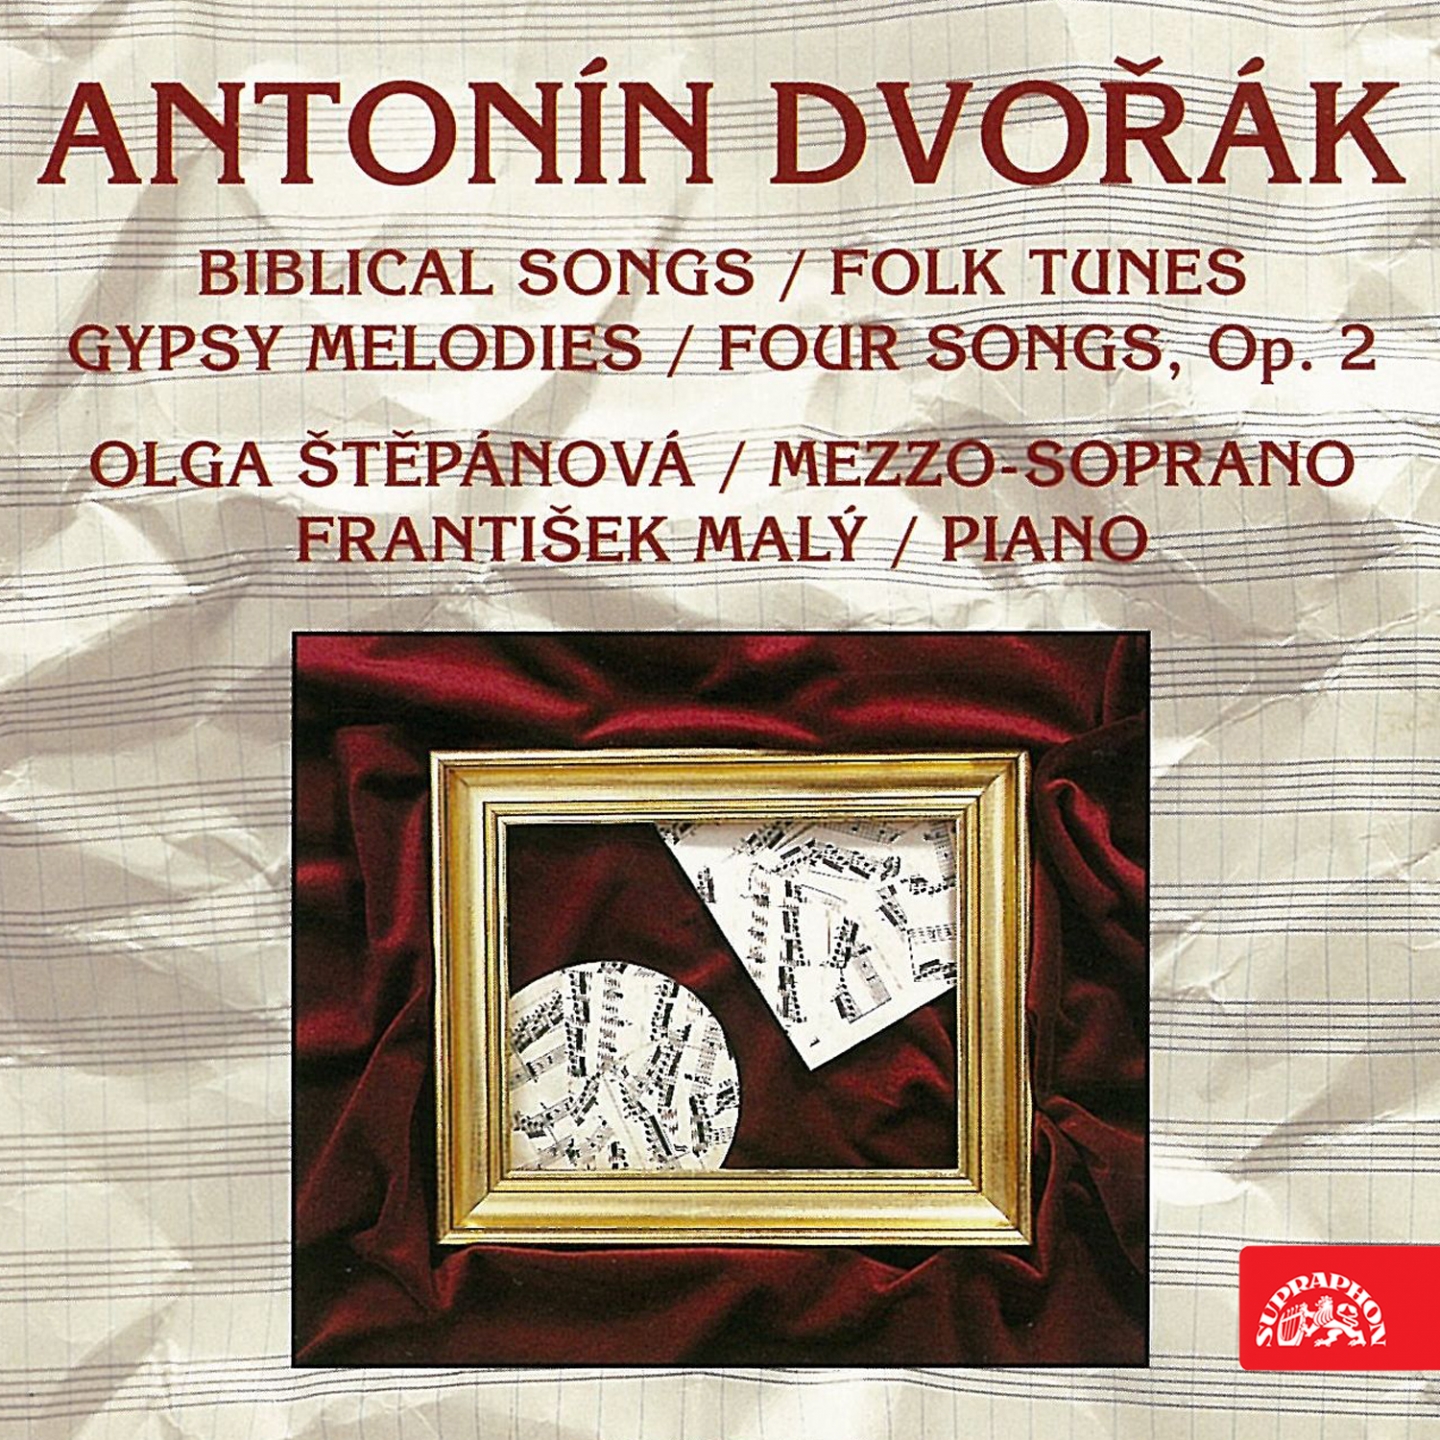 Dvoa k: Songs Biblical Songs, Folk Tunes, Four Songs, Gypsy Melodies